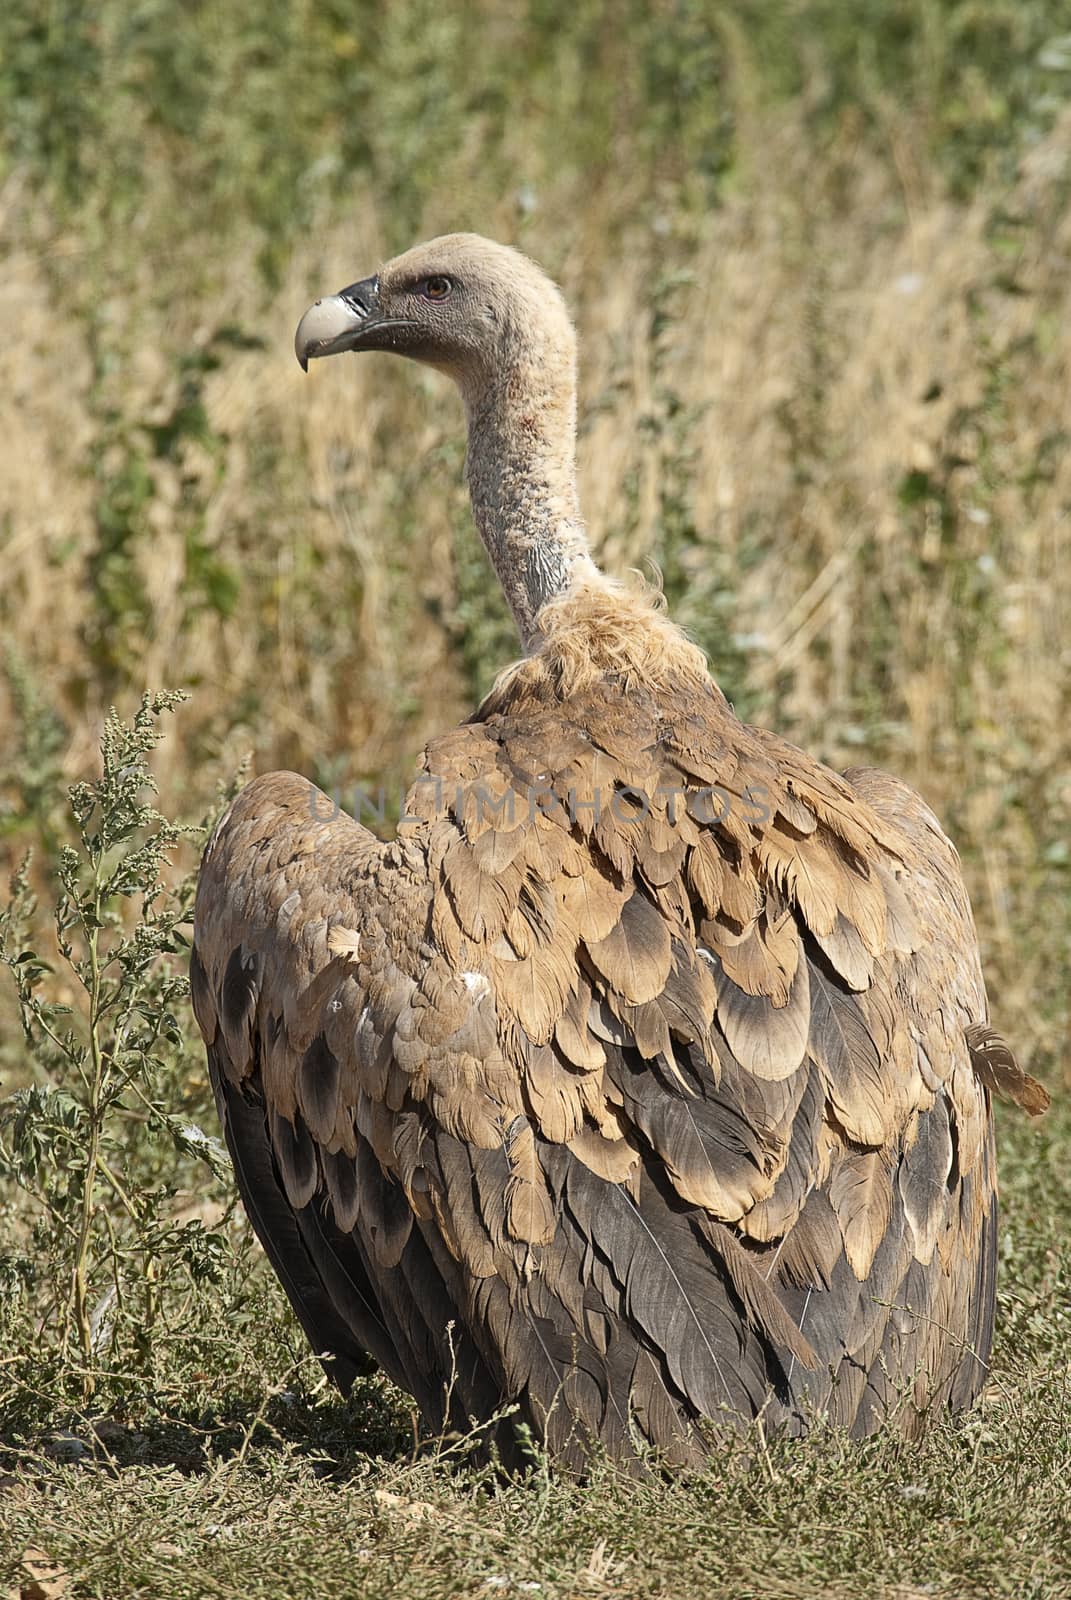 Griffon vulture, Gyps fulvus, raptor bird carrion portrait by jalonsohu@gmail.com